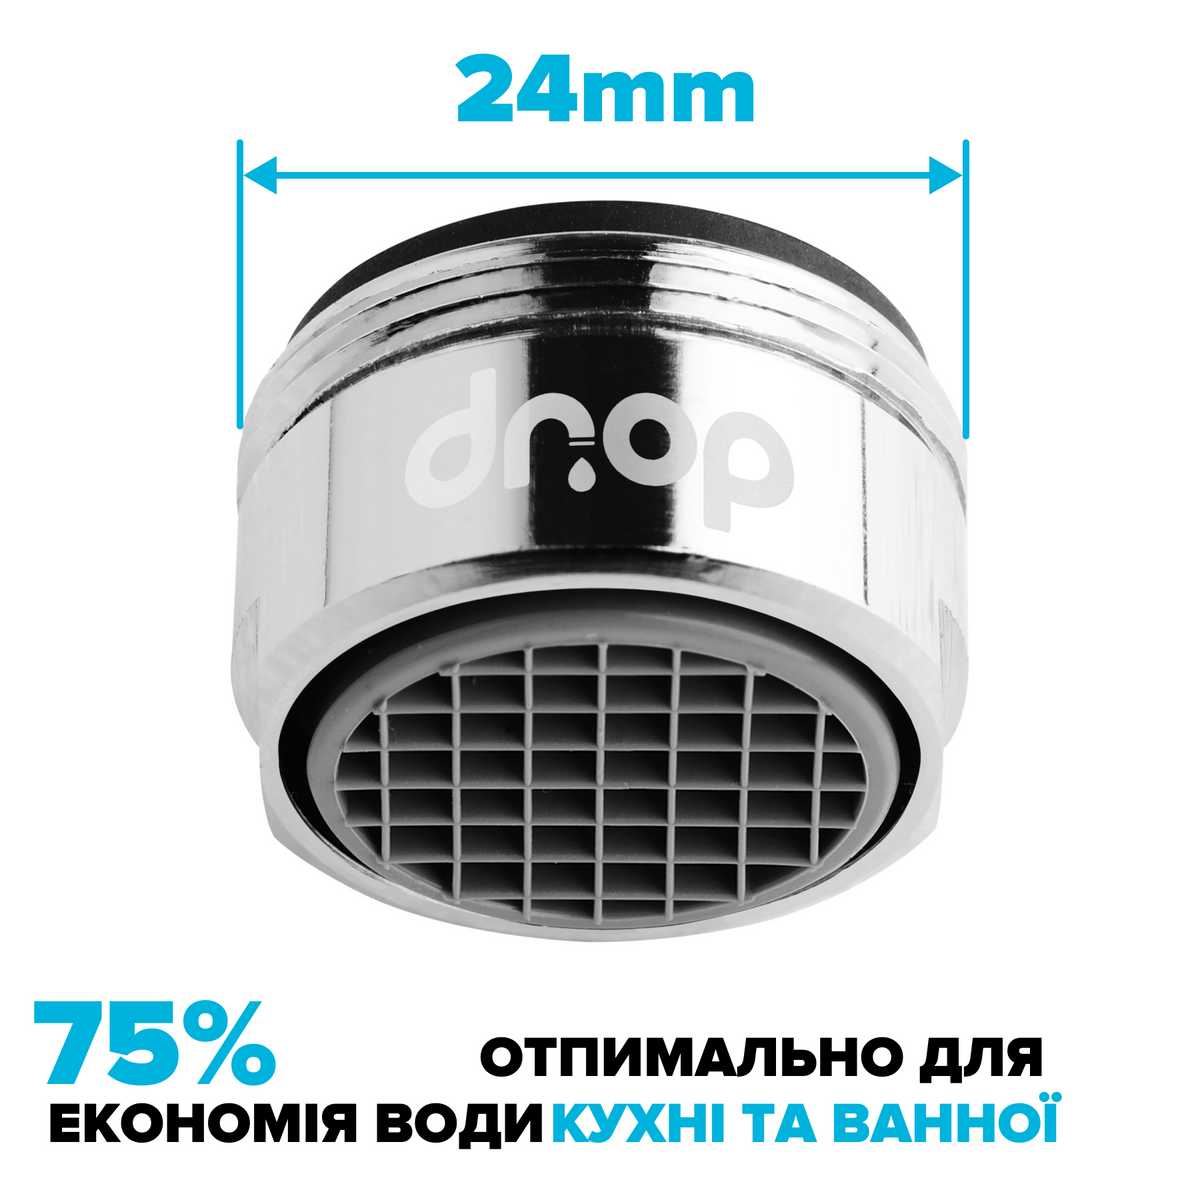 Водосберегающий аэратор DROP PM03T-24 для смесителя - Экономия 75%, 3 л/мин, внешняя М 24 мм